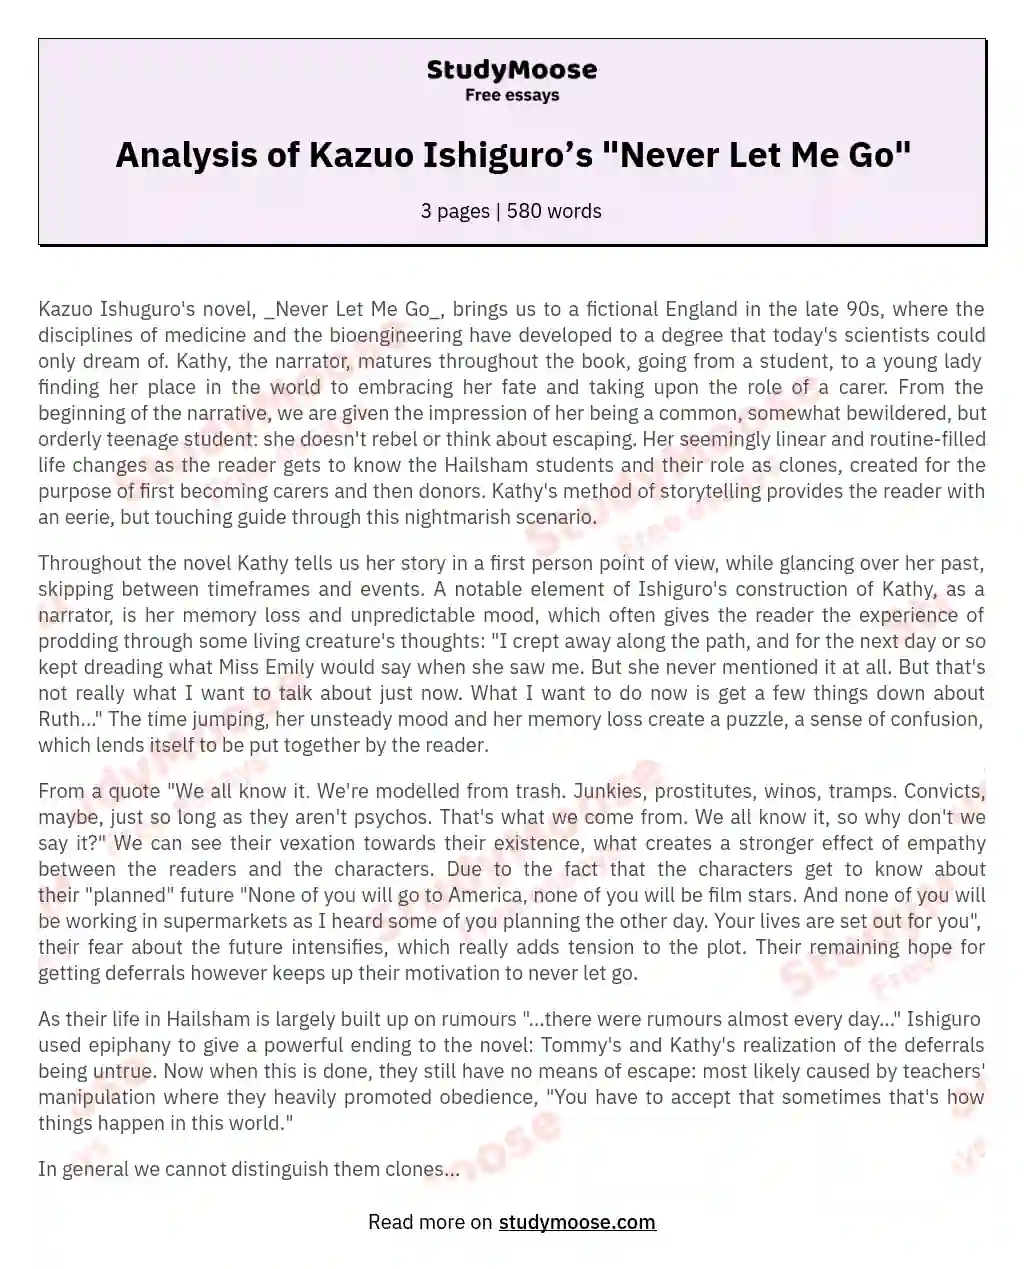 Analysis of Kazuo Ishiguro’s "Never Let Me Go" essay